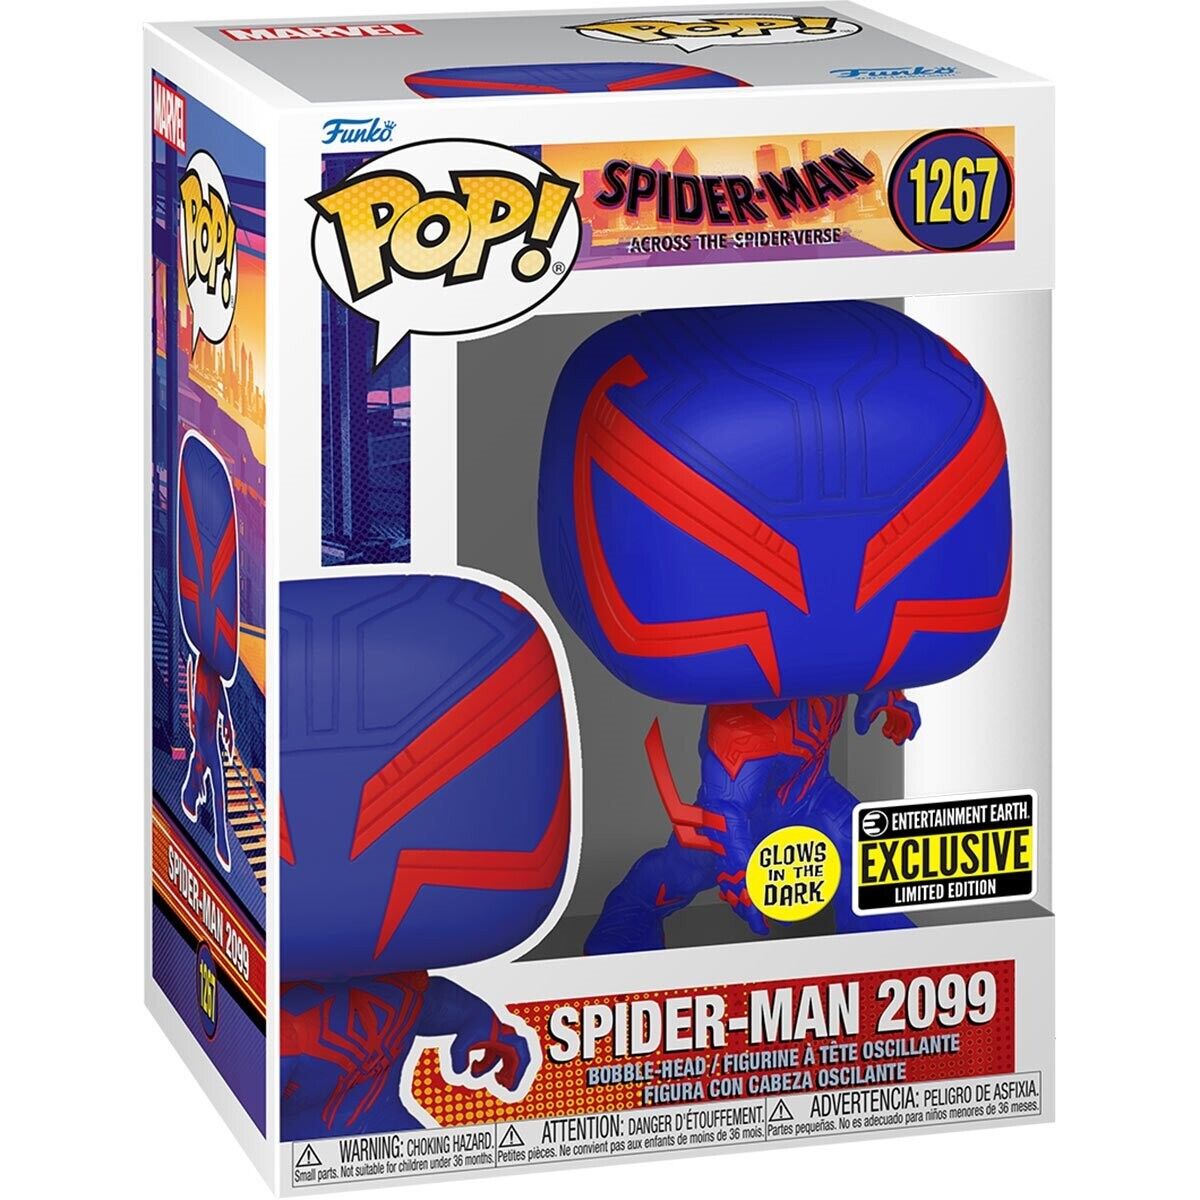 Funko Pop Spiderman Across The Spider-Verse Spiderman 2099 GITD Figure exclusive